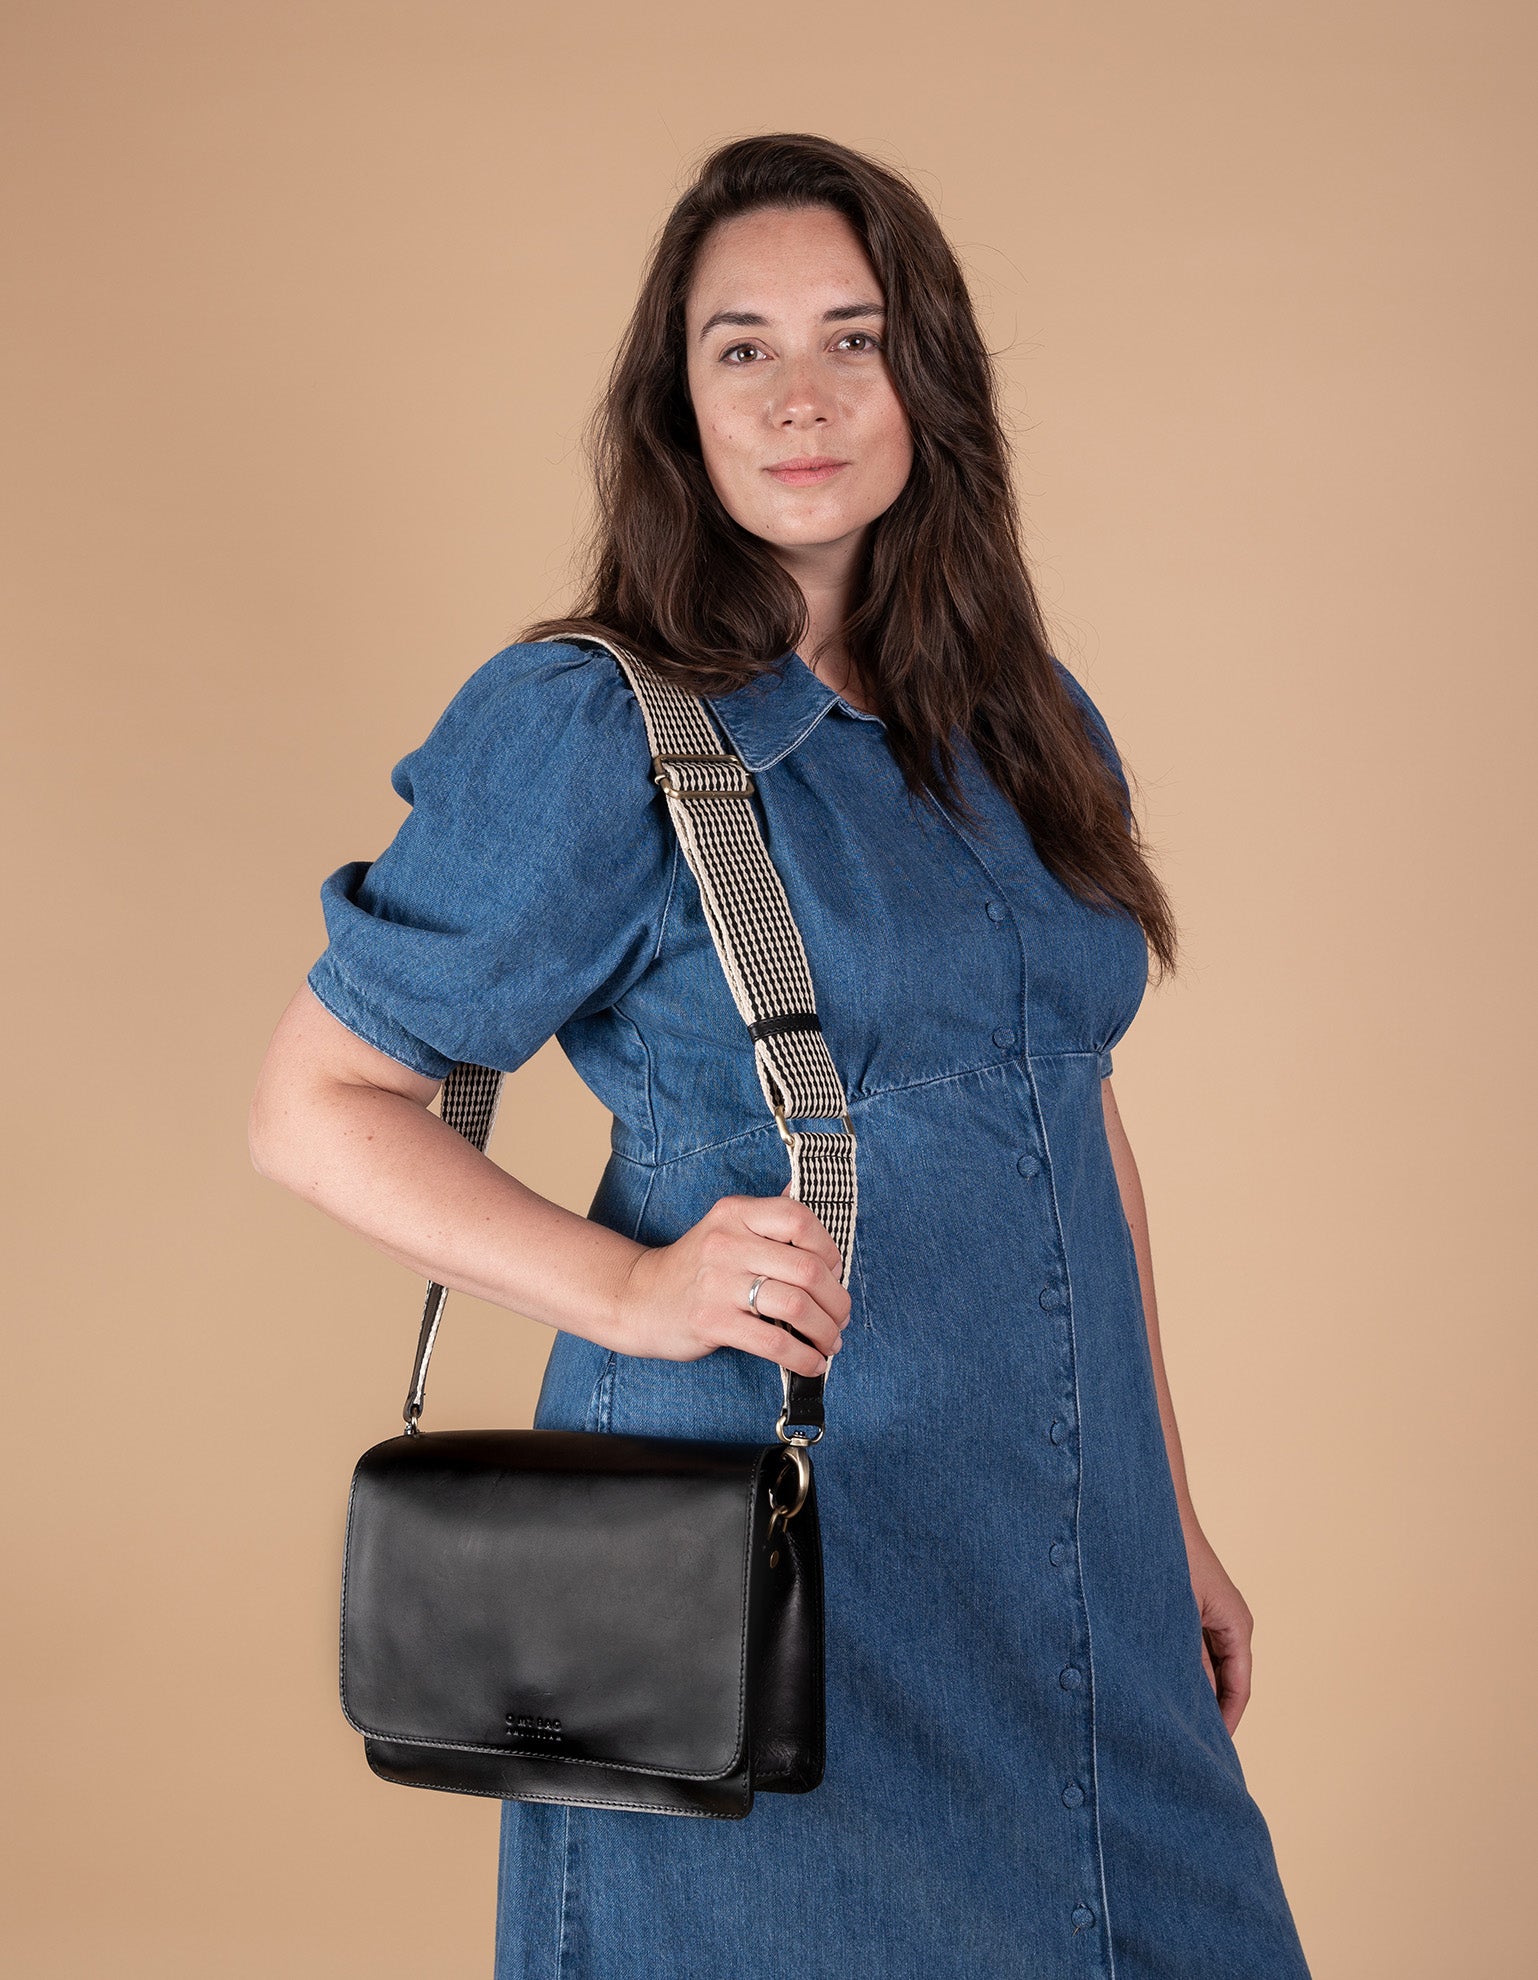 Black Leather womens handbag. Square shape with an adjustable webbing strap. Model product image